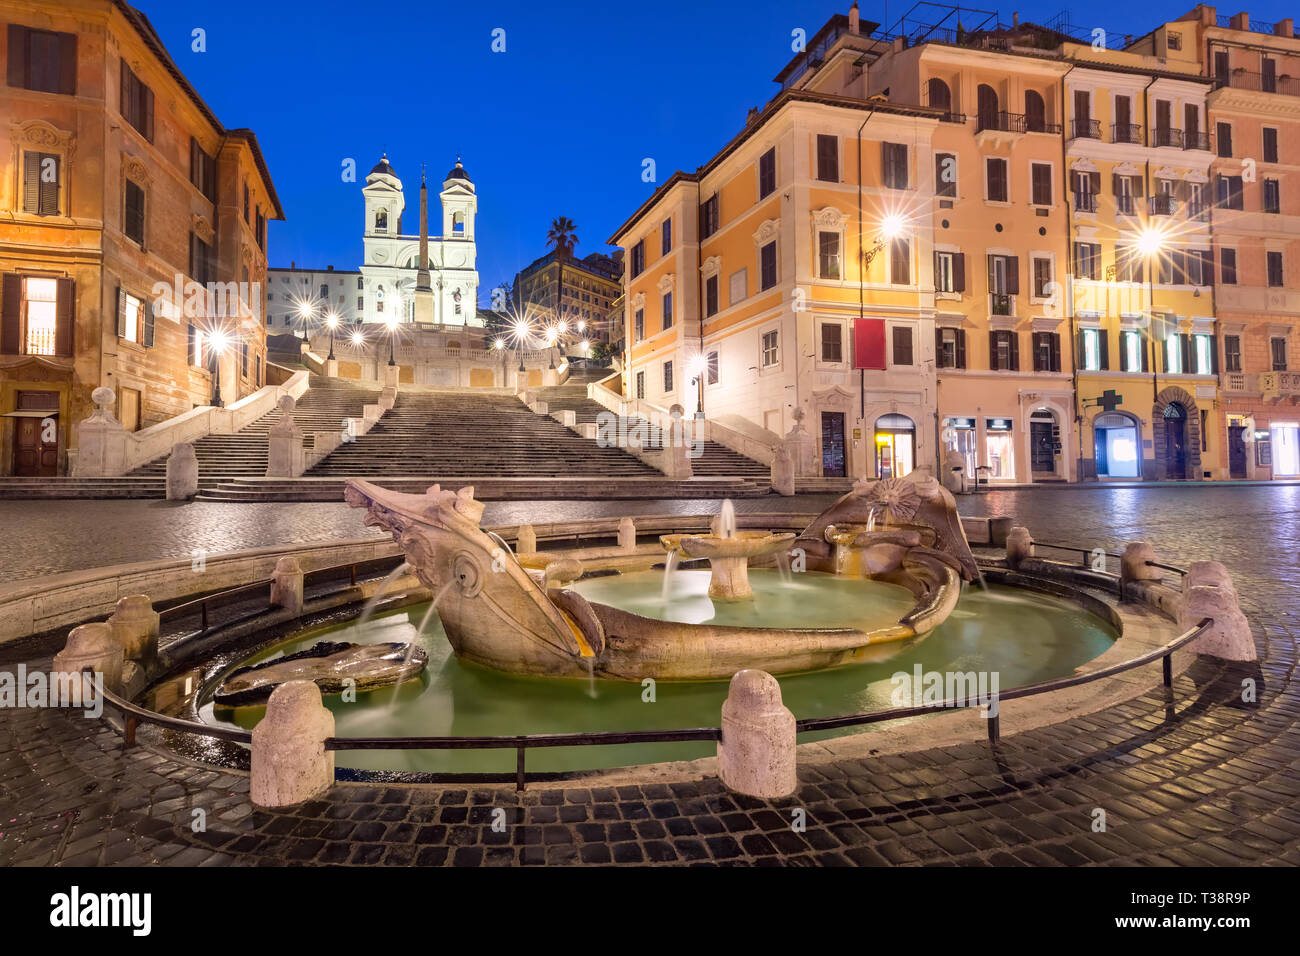 Piazza di Spagna at night, Rome, Italy. Stock Photo